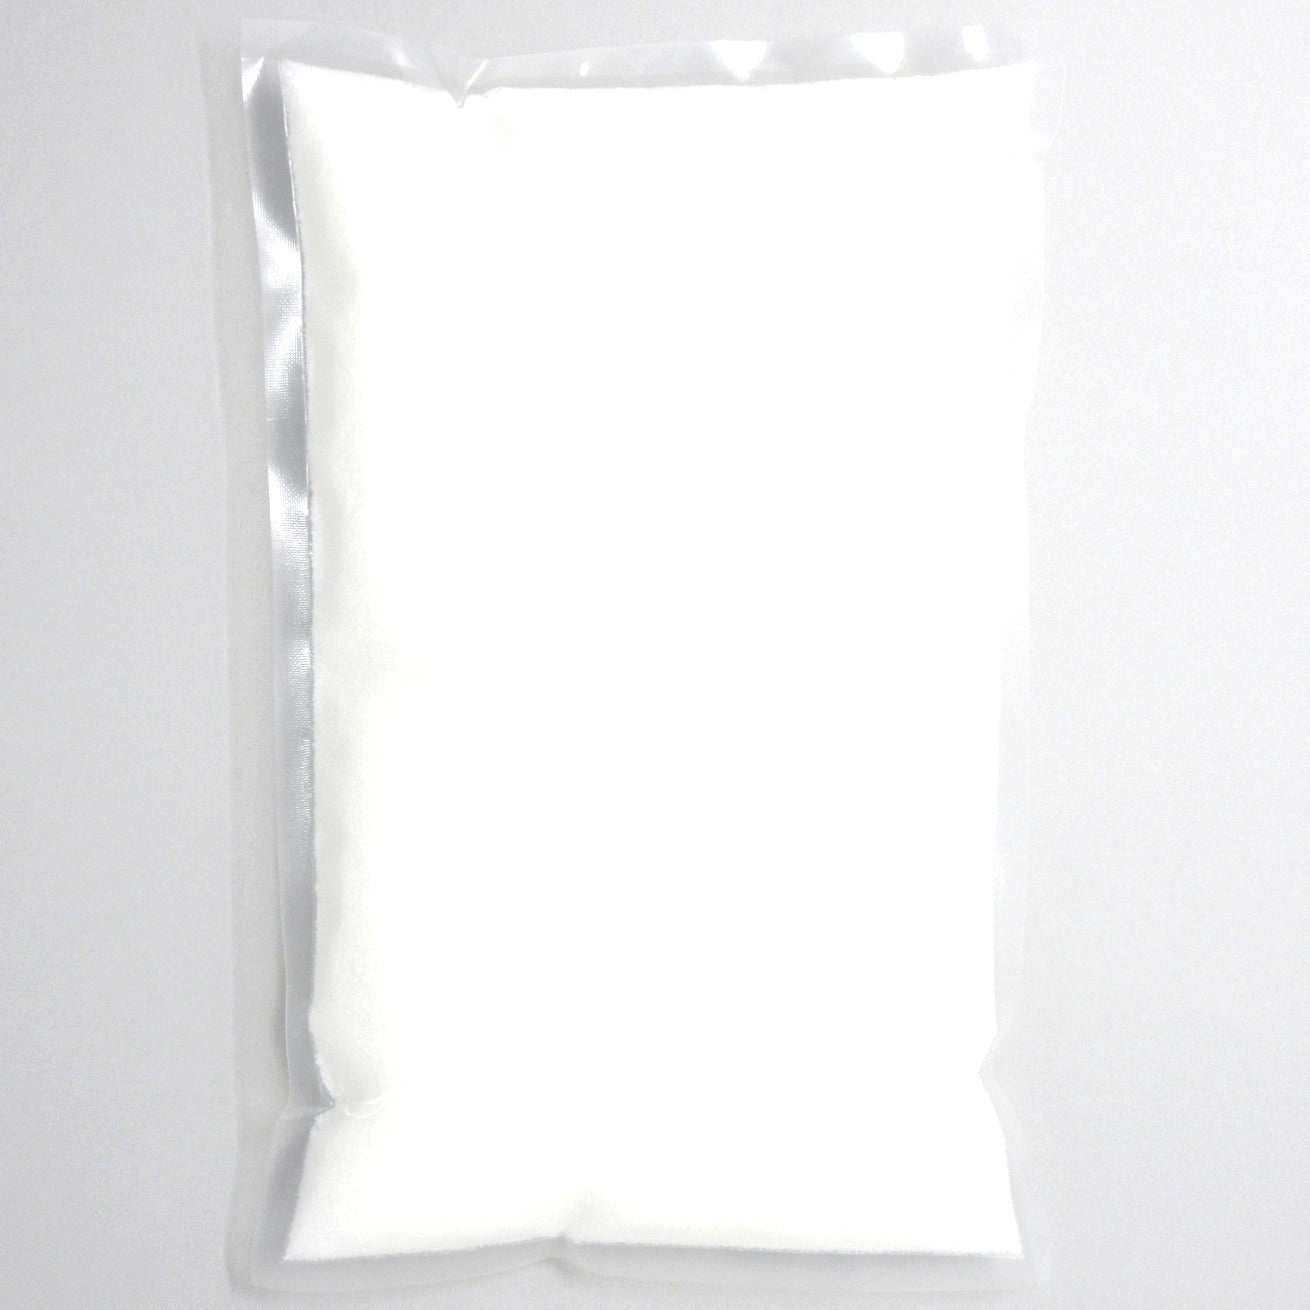 Flour Barrel product image - Fine White Sugar